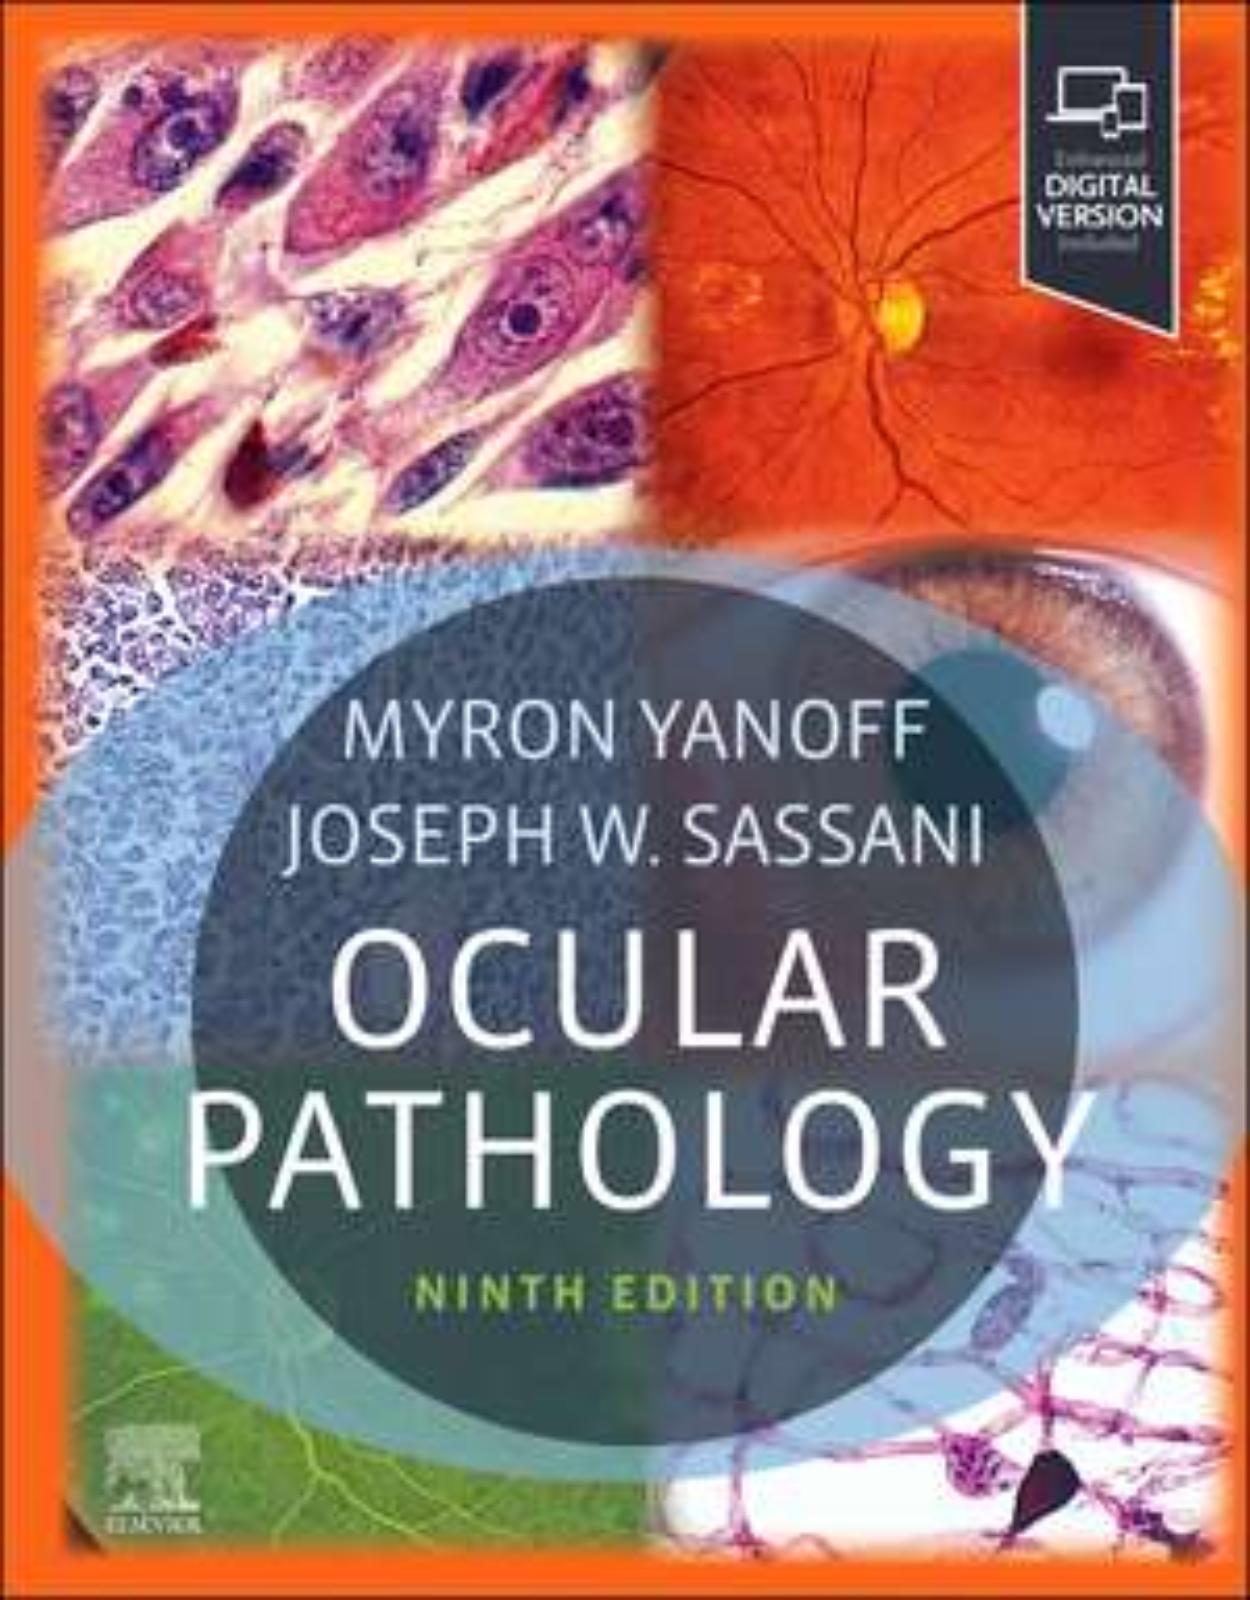 Ocular Pathology, 9th Edition